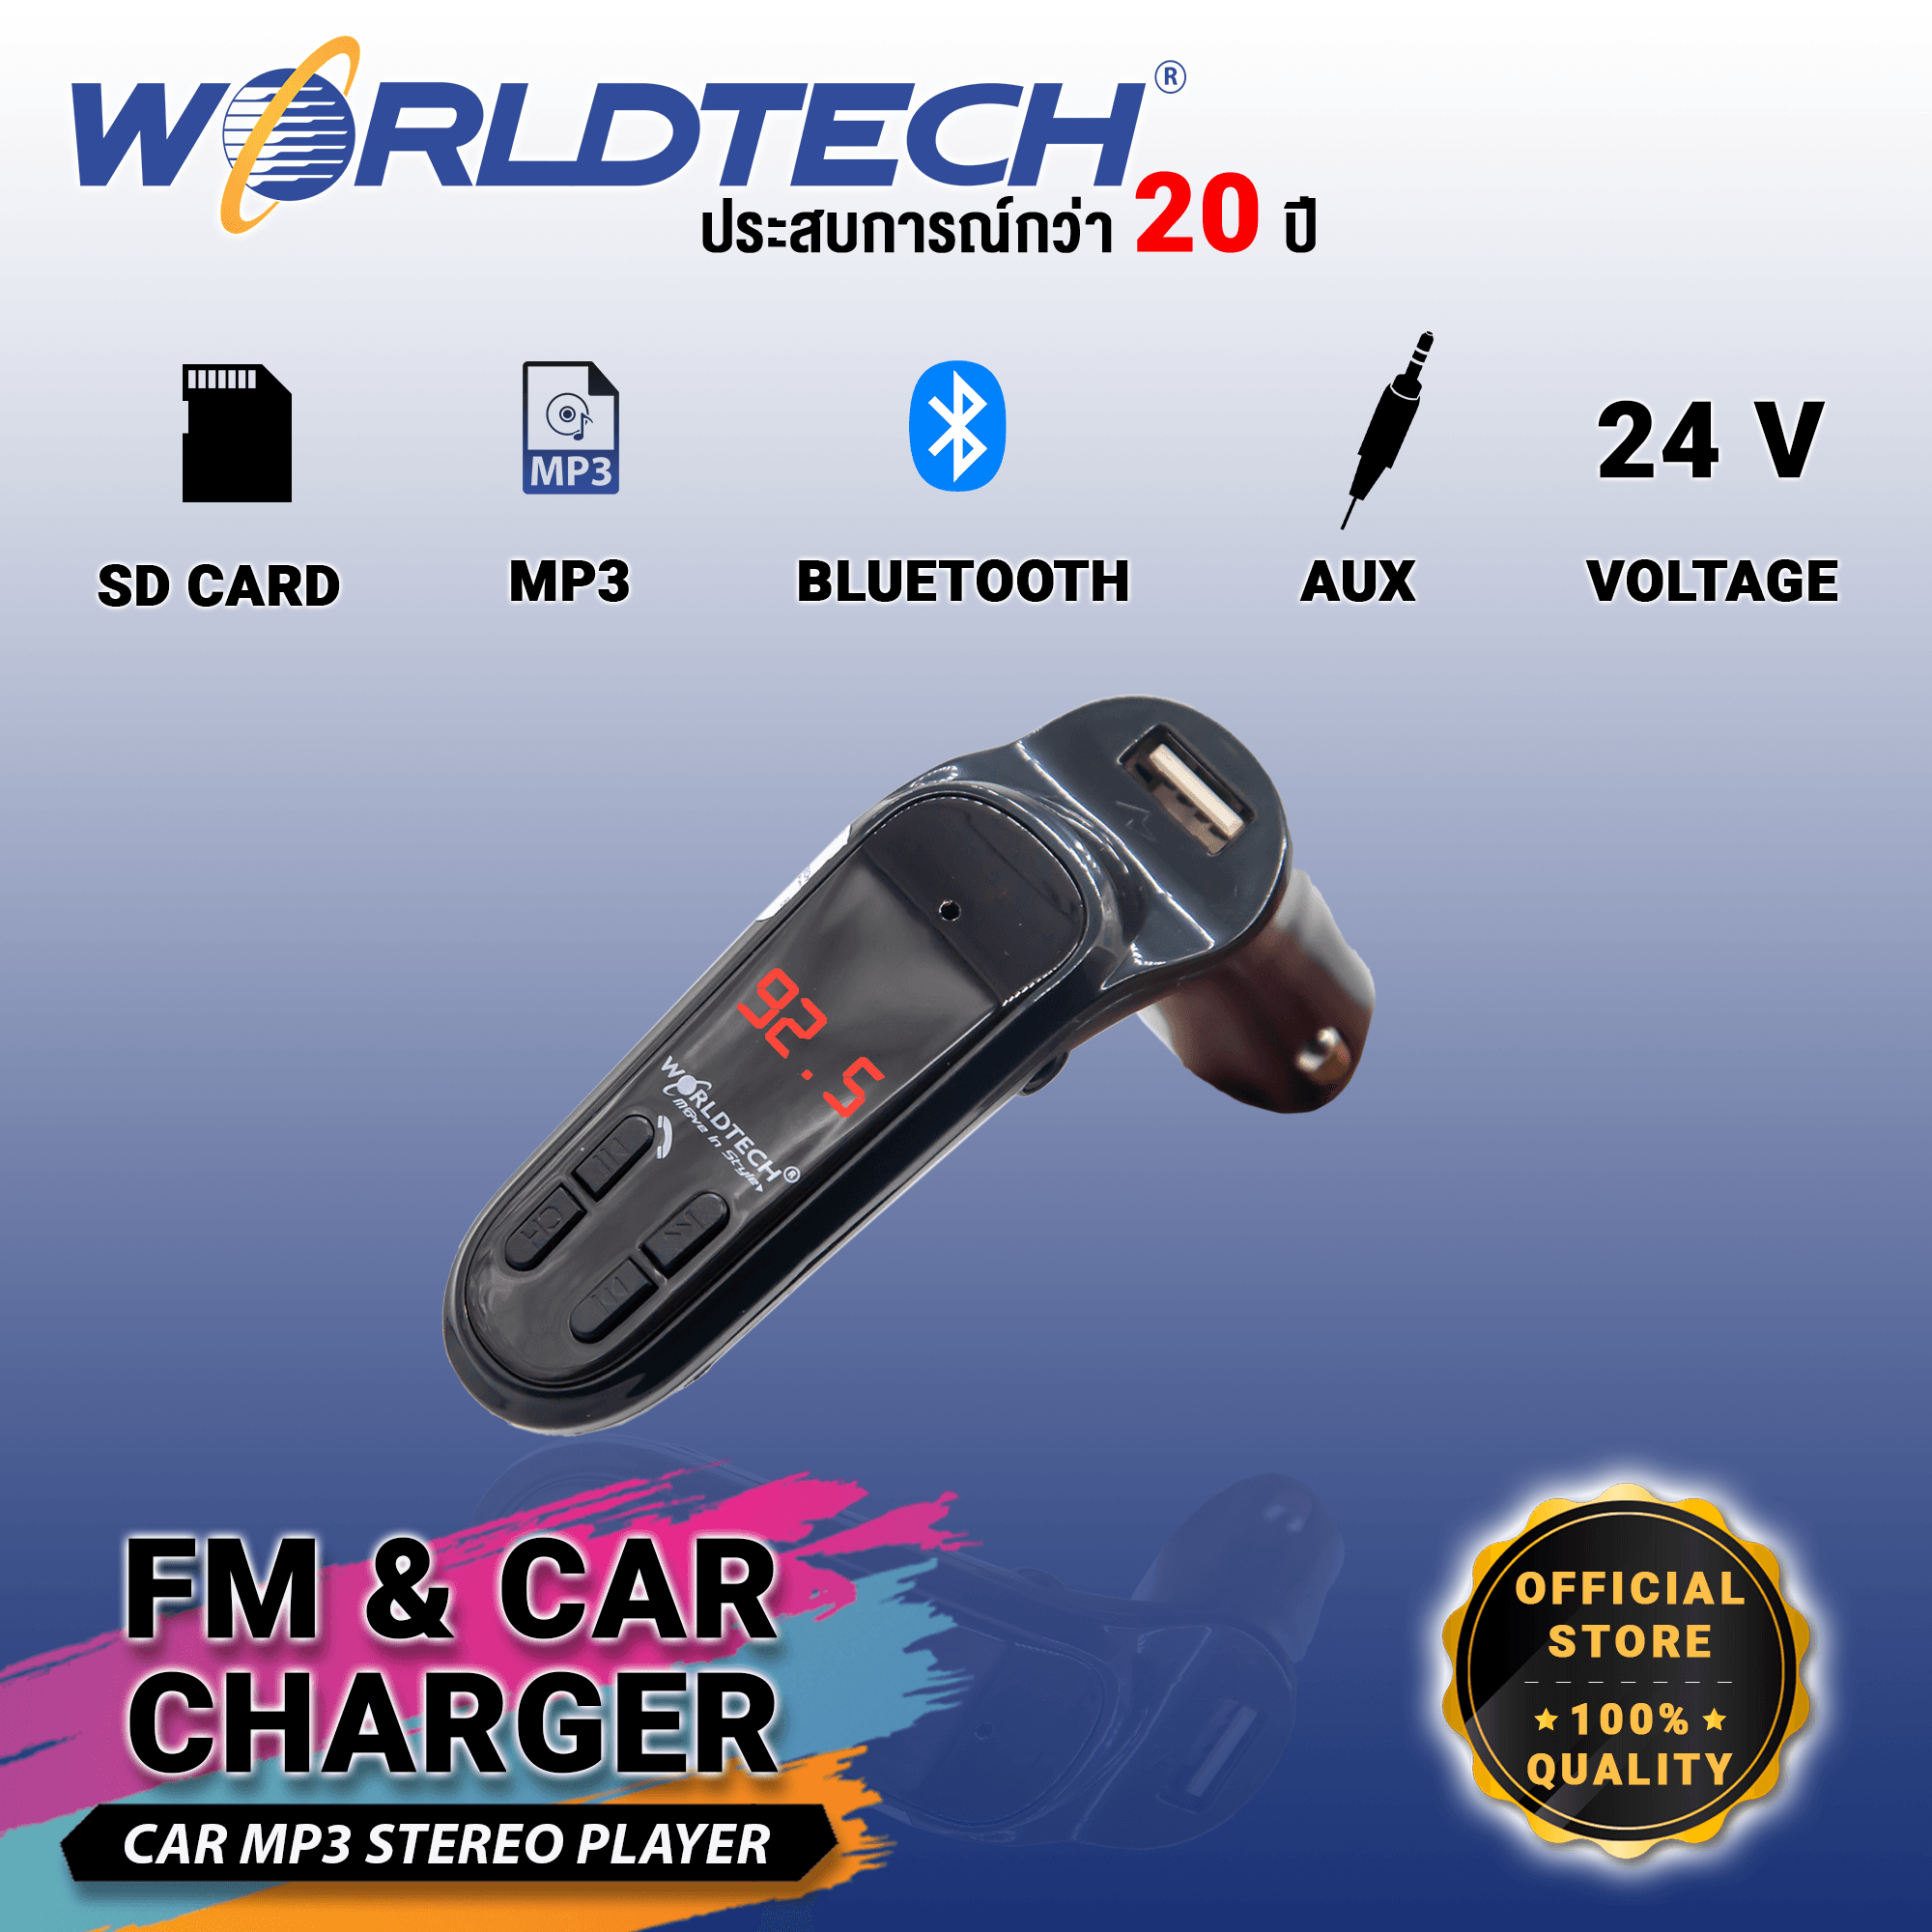 Worldtech WT-88FM ตัวรับสัญญาณบลูทูธ Bluetooth เครื่องเล่นเพลง MP3 FM แฮนด์ฟรีรถยนต์ บลูทูธในรถ สปีกเกอร์โฟน FM ชาร์จ MP3 บลูทูธรถยนต์ ตัวรับบลูทูธ WT-88FM-19_Black